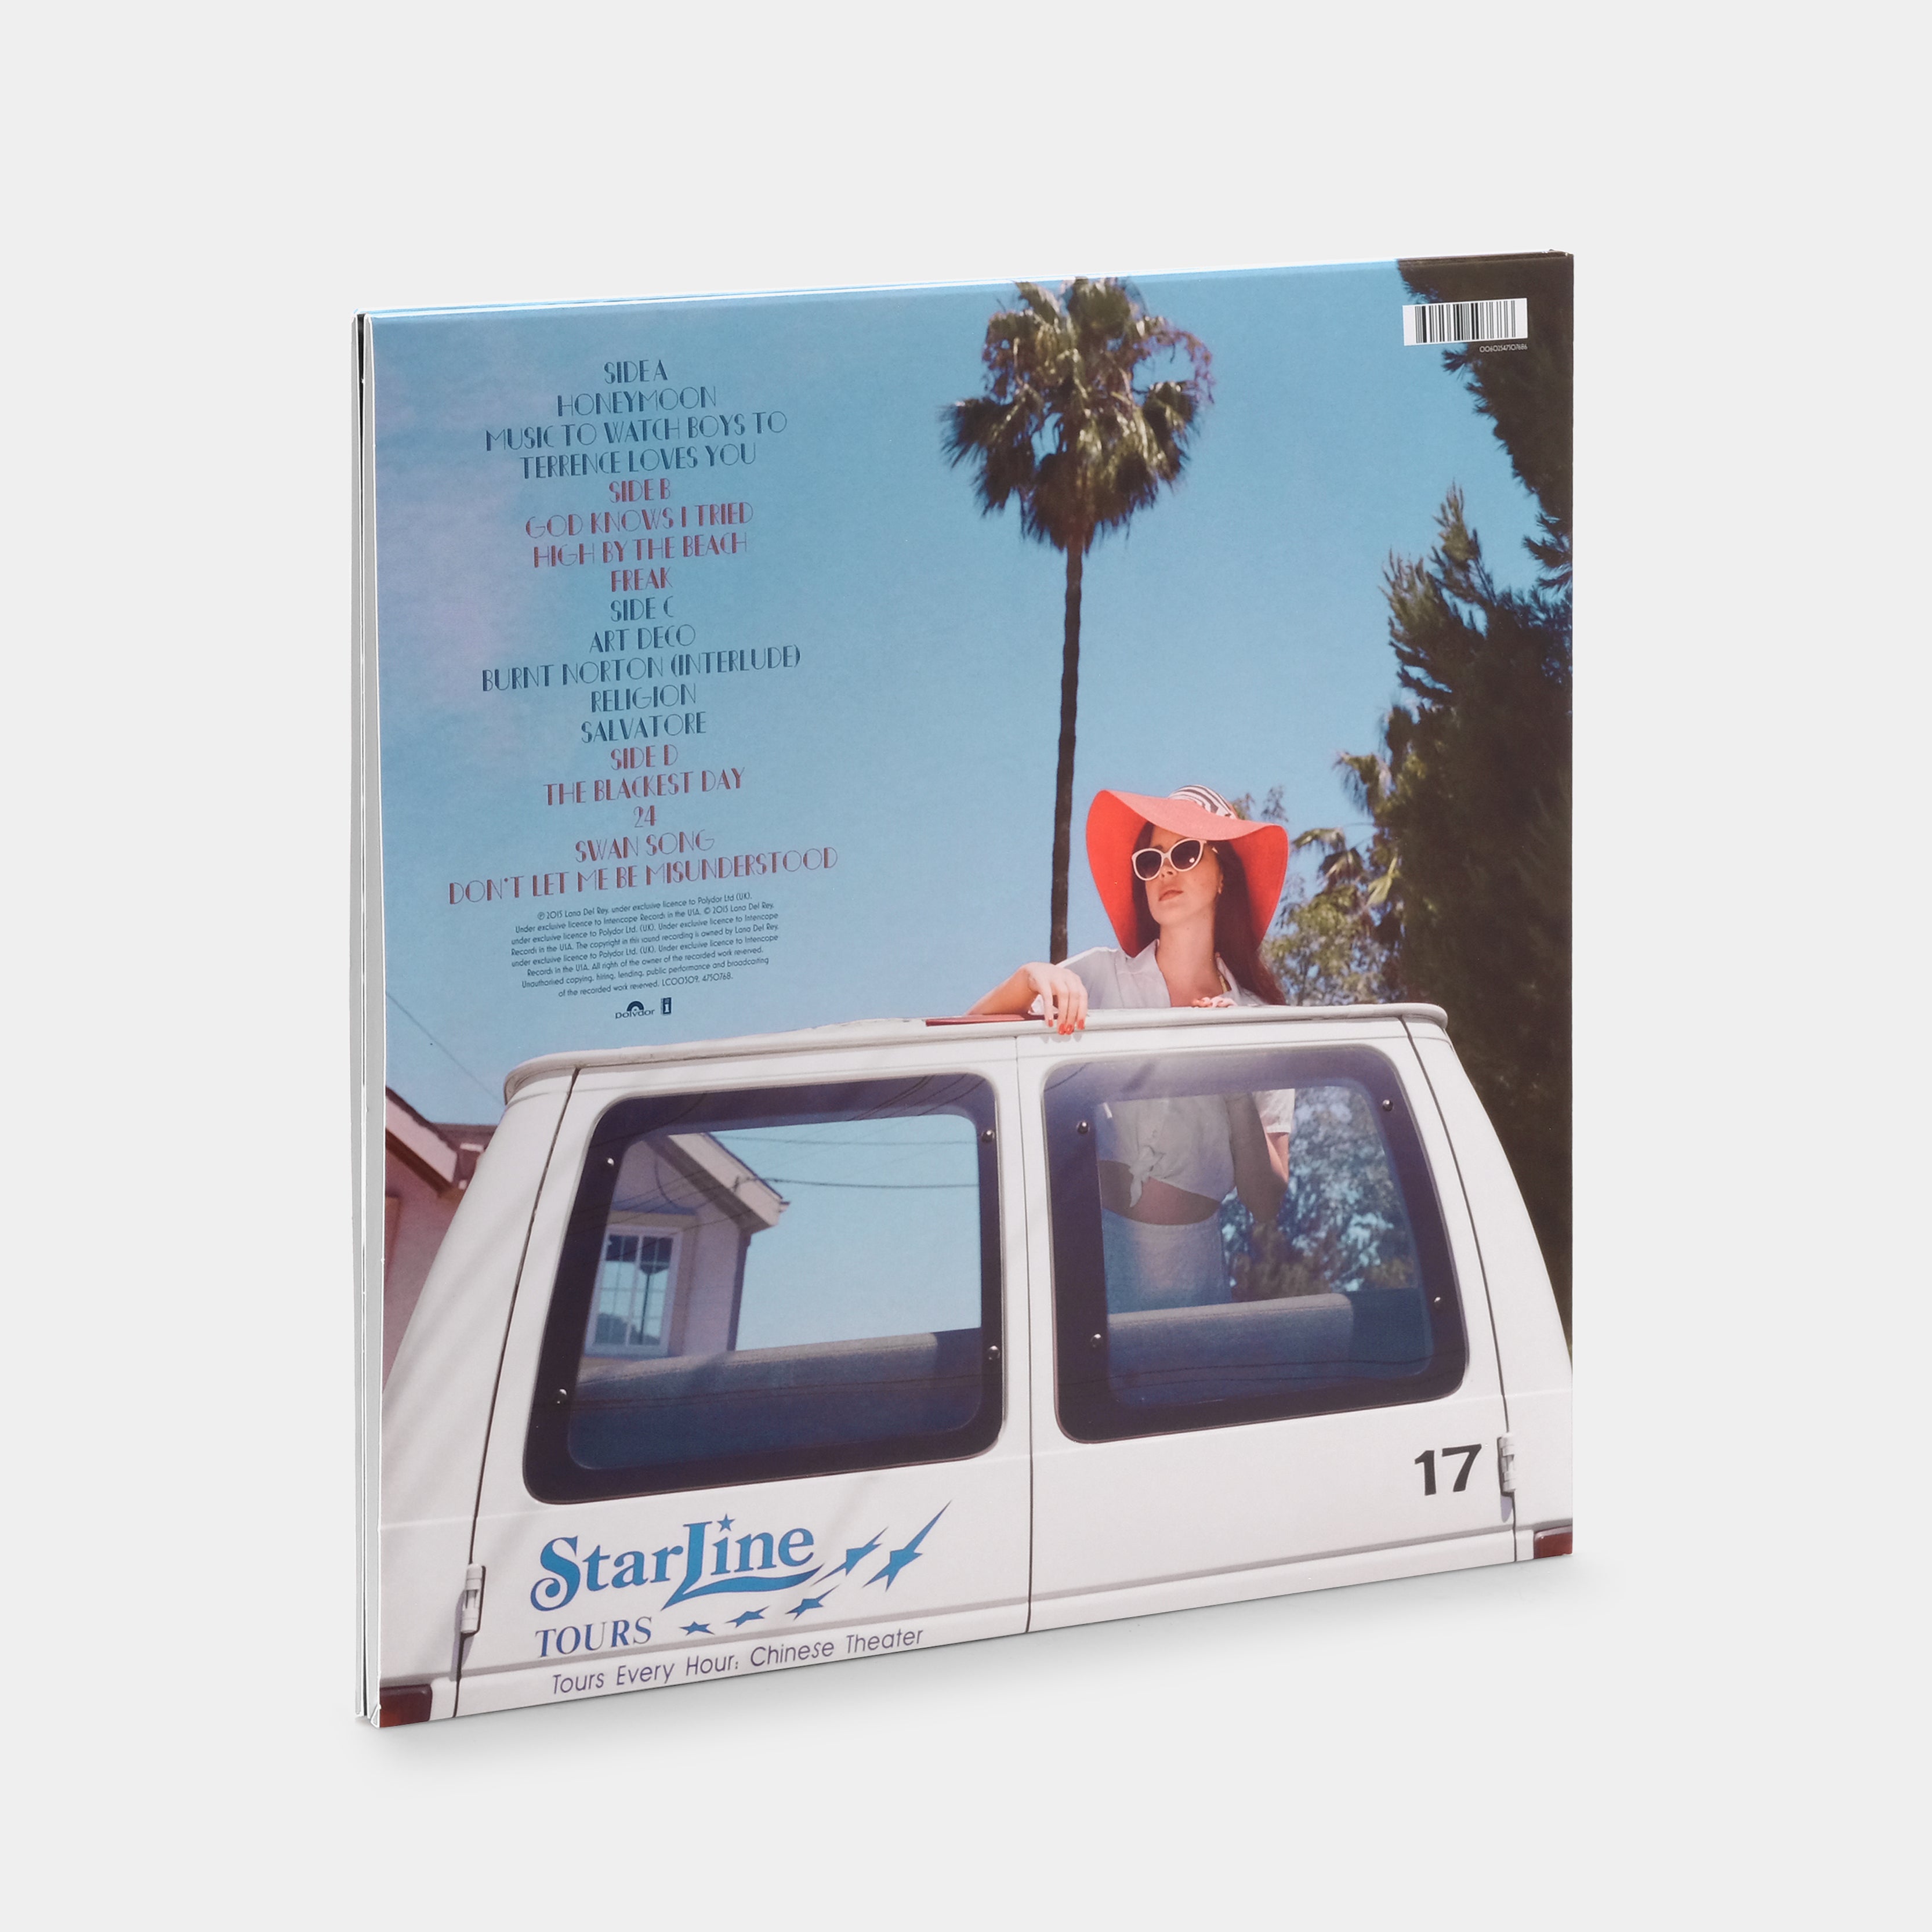 Lana Del Rey - Honeymoon 2xLP Vinyl Record